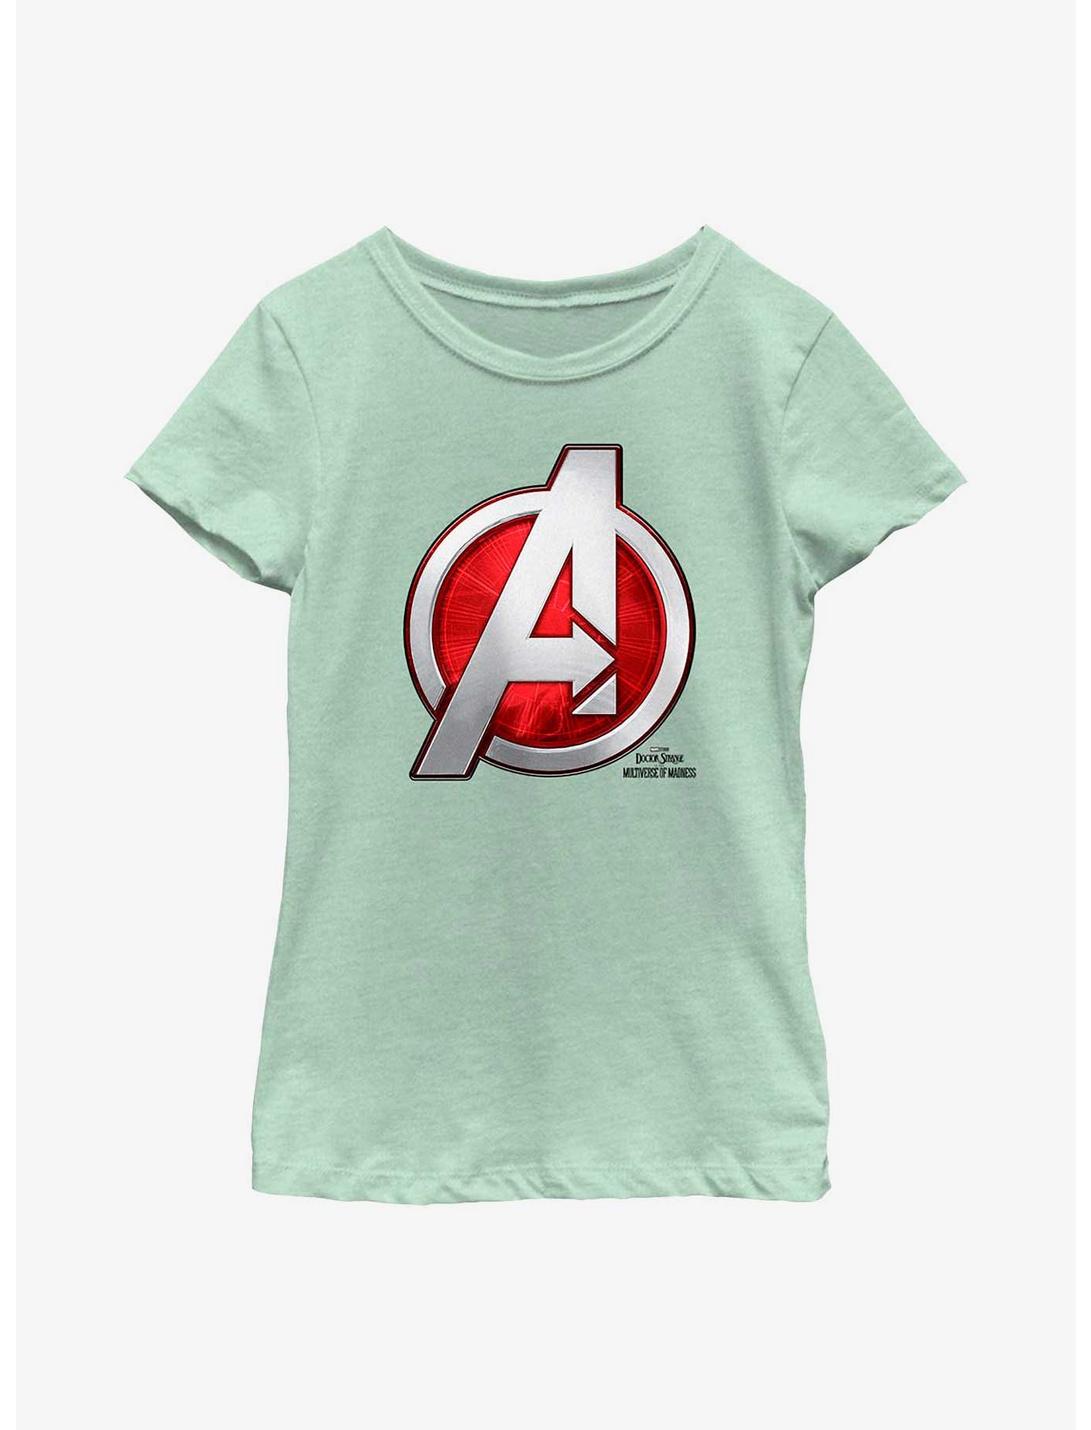 Marvel Doctor Strange Multiverse Of Madness Avengers Logo Youth Girls T-Shirt, MINT, hi-res